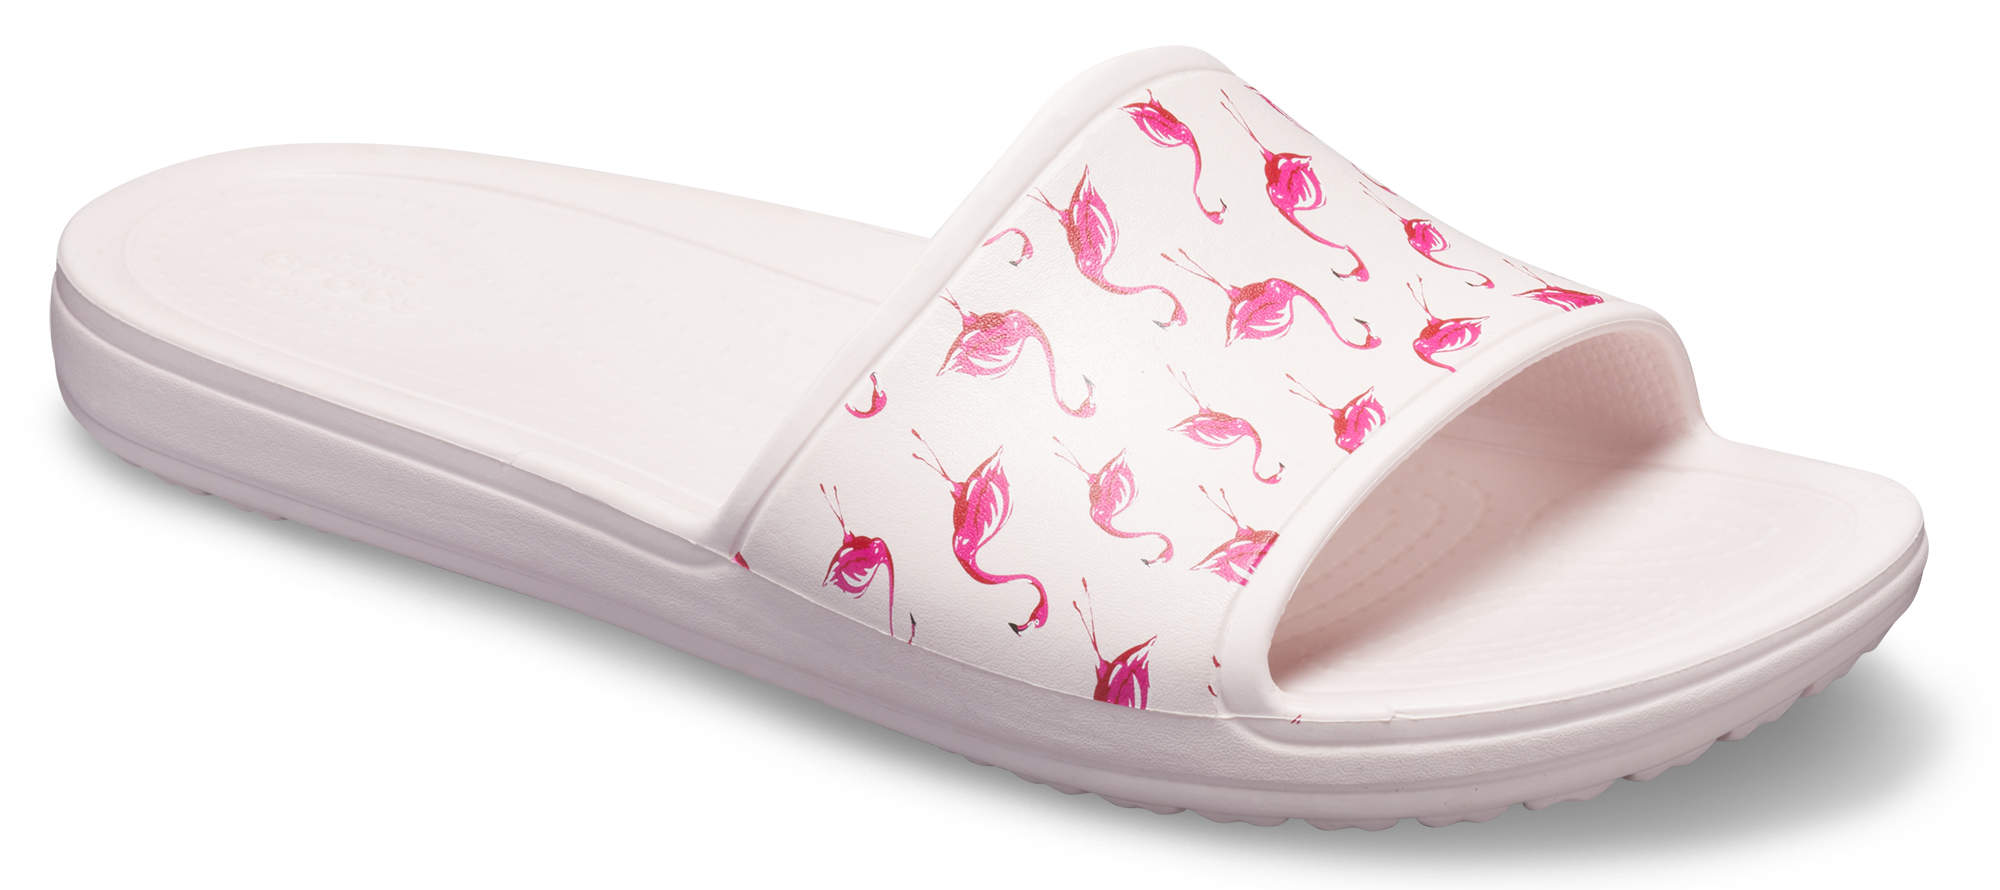 Crocs Women's Sloane SeasonalGrph Sld Slide Sandals - image 1 of 6